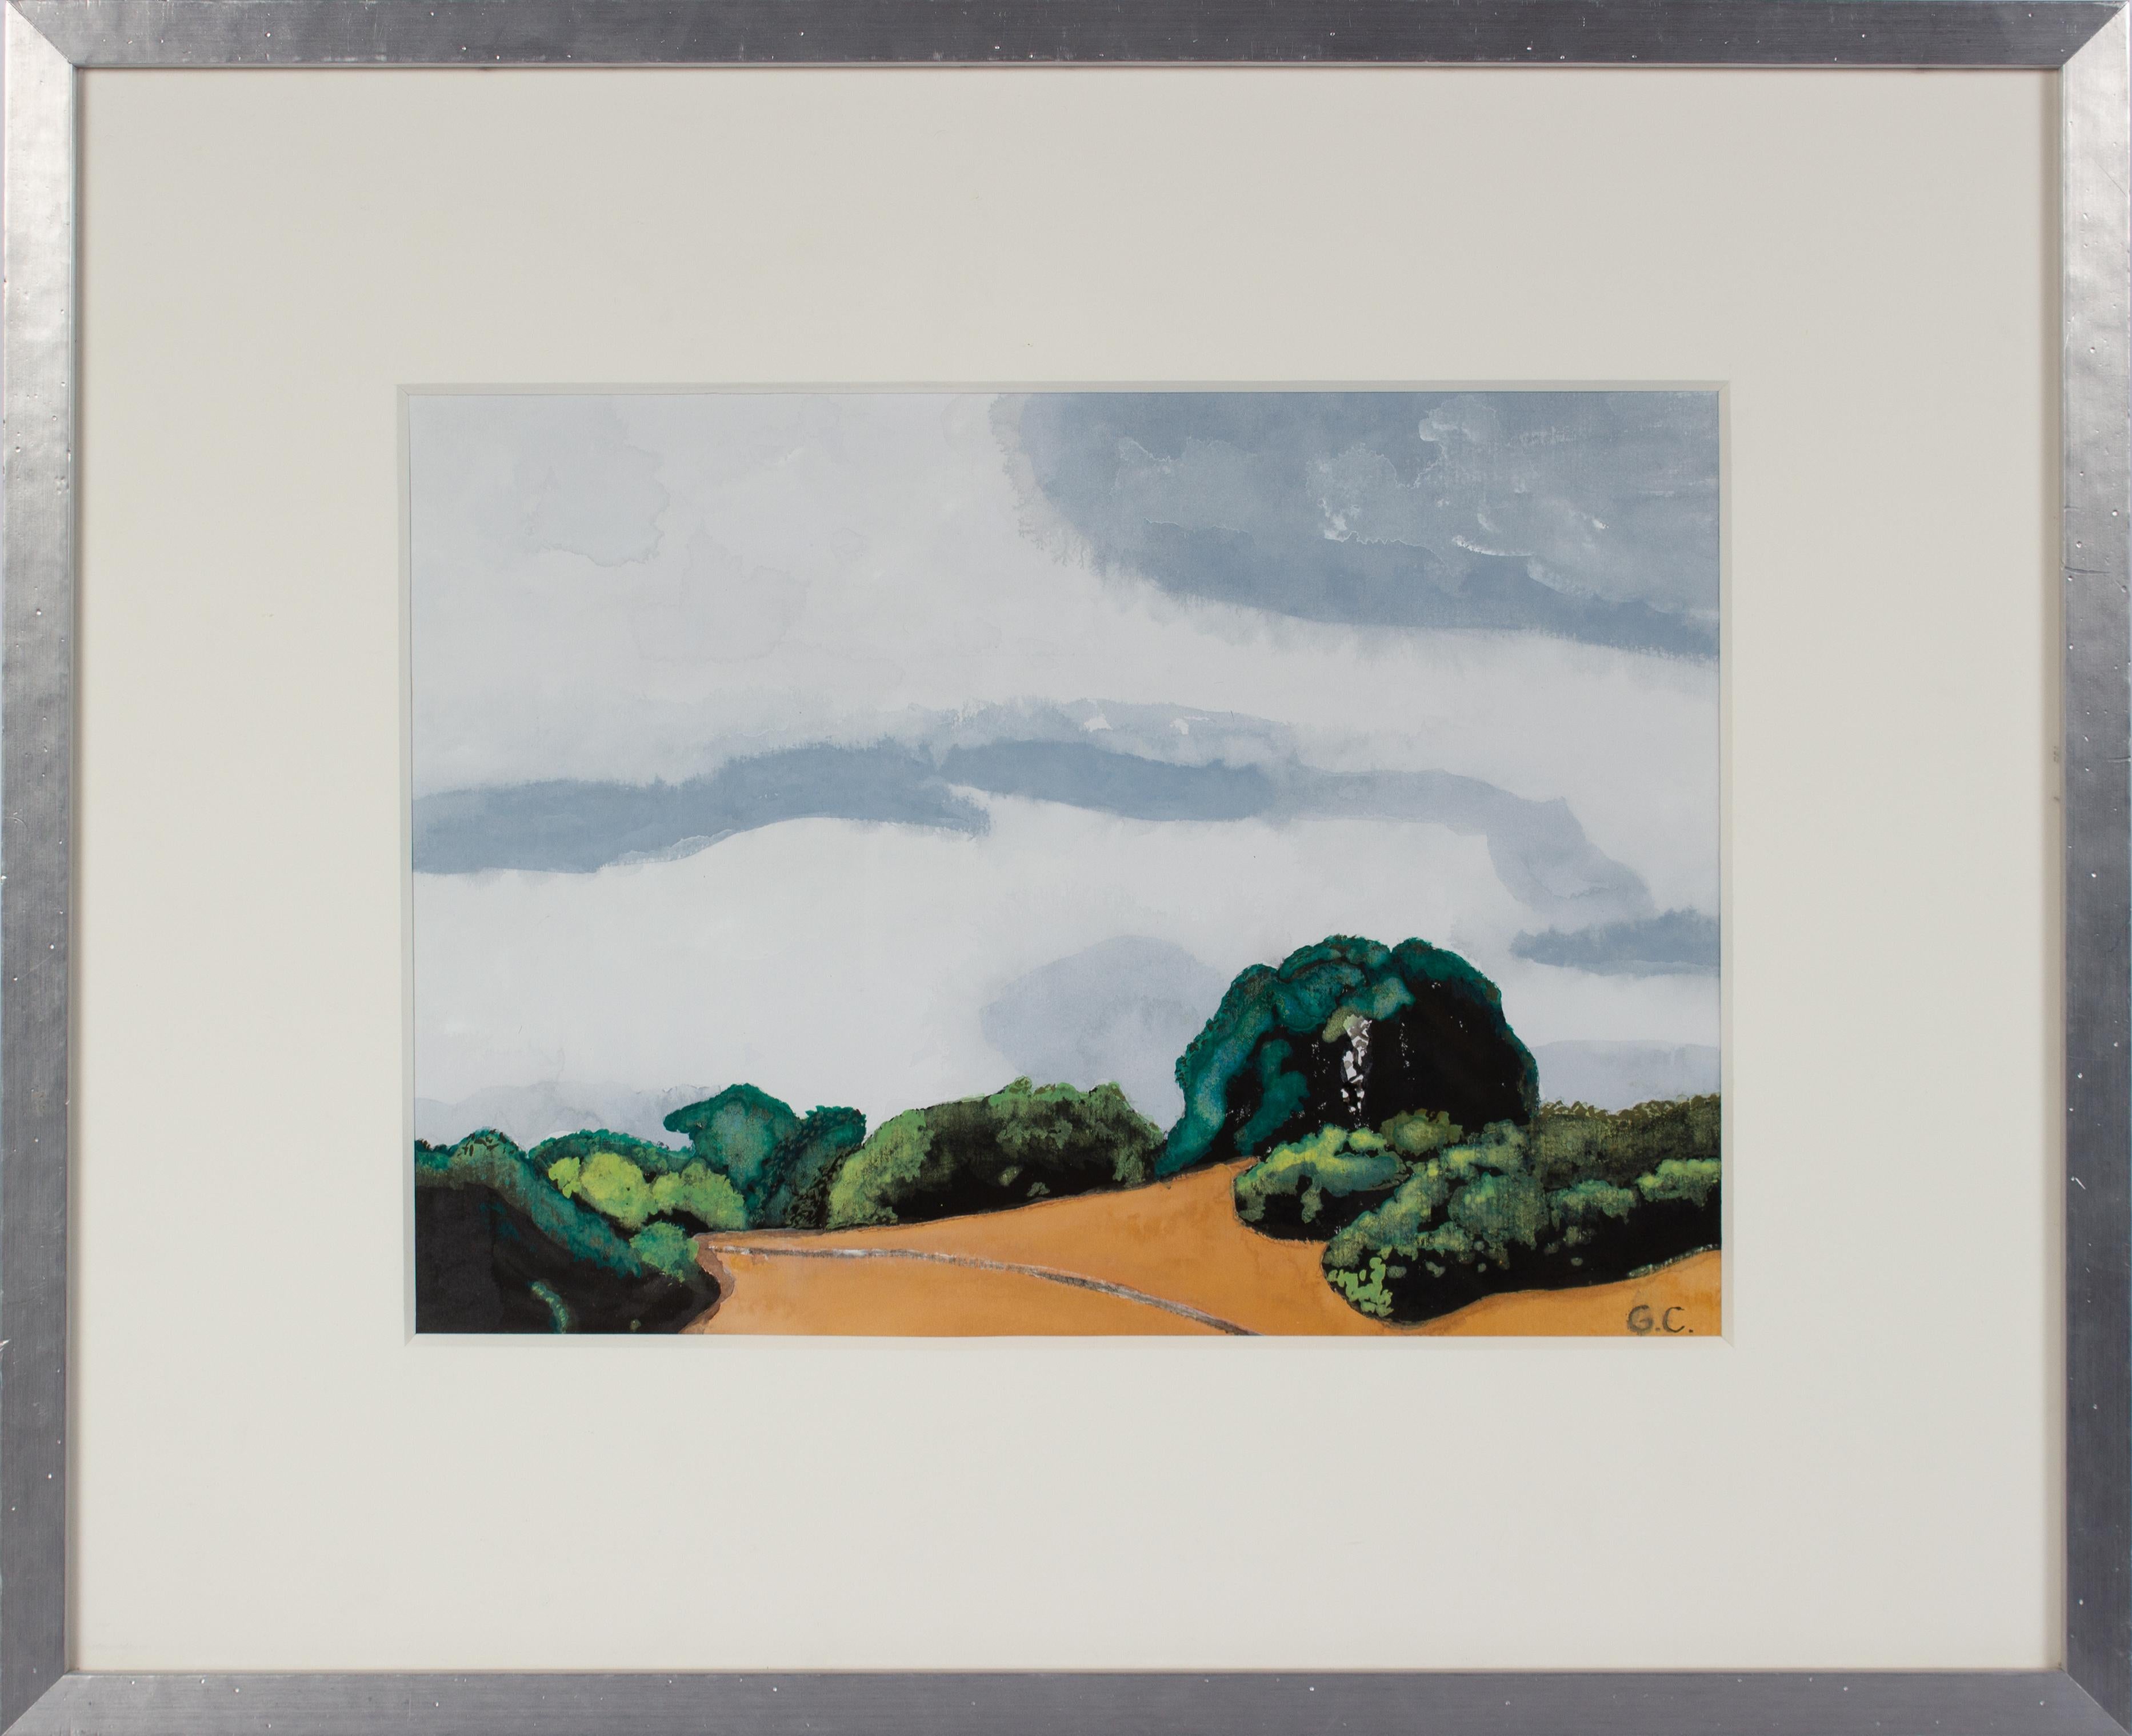 Gaétan Caron Landscape Art - "On the Way to Fig Meadow" Mendocino Landscape in Watercolor & Ink, Spring 2016